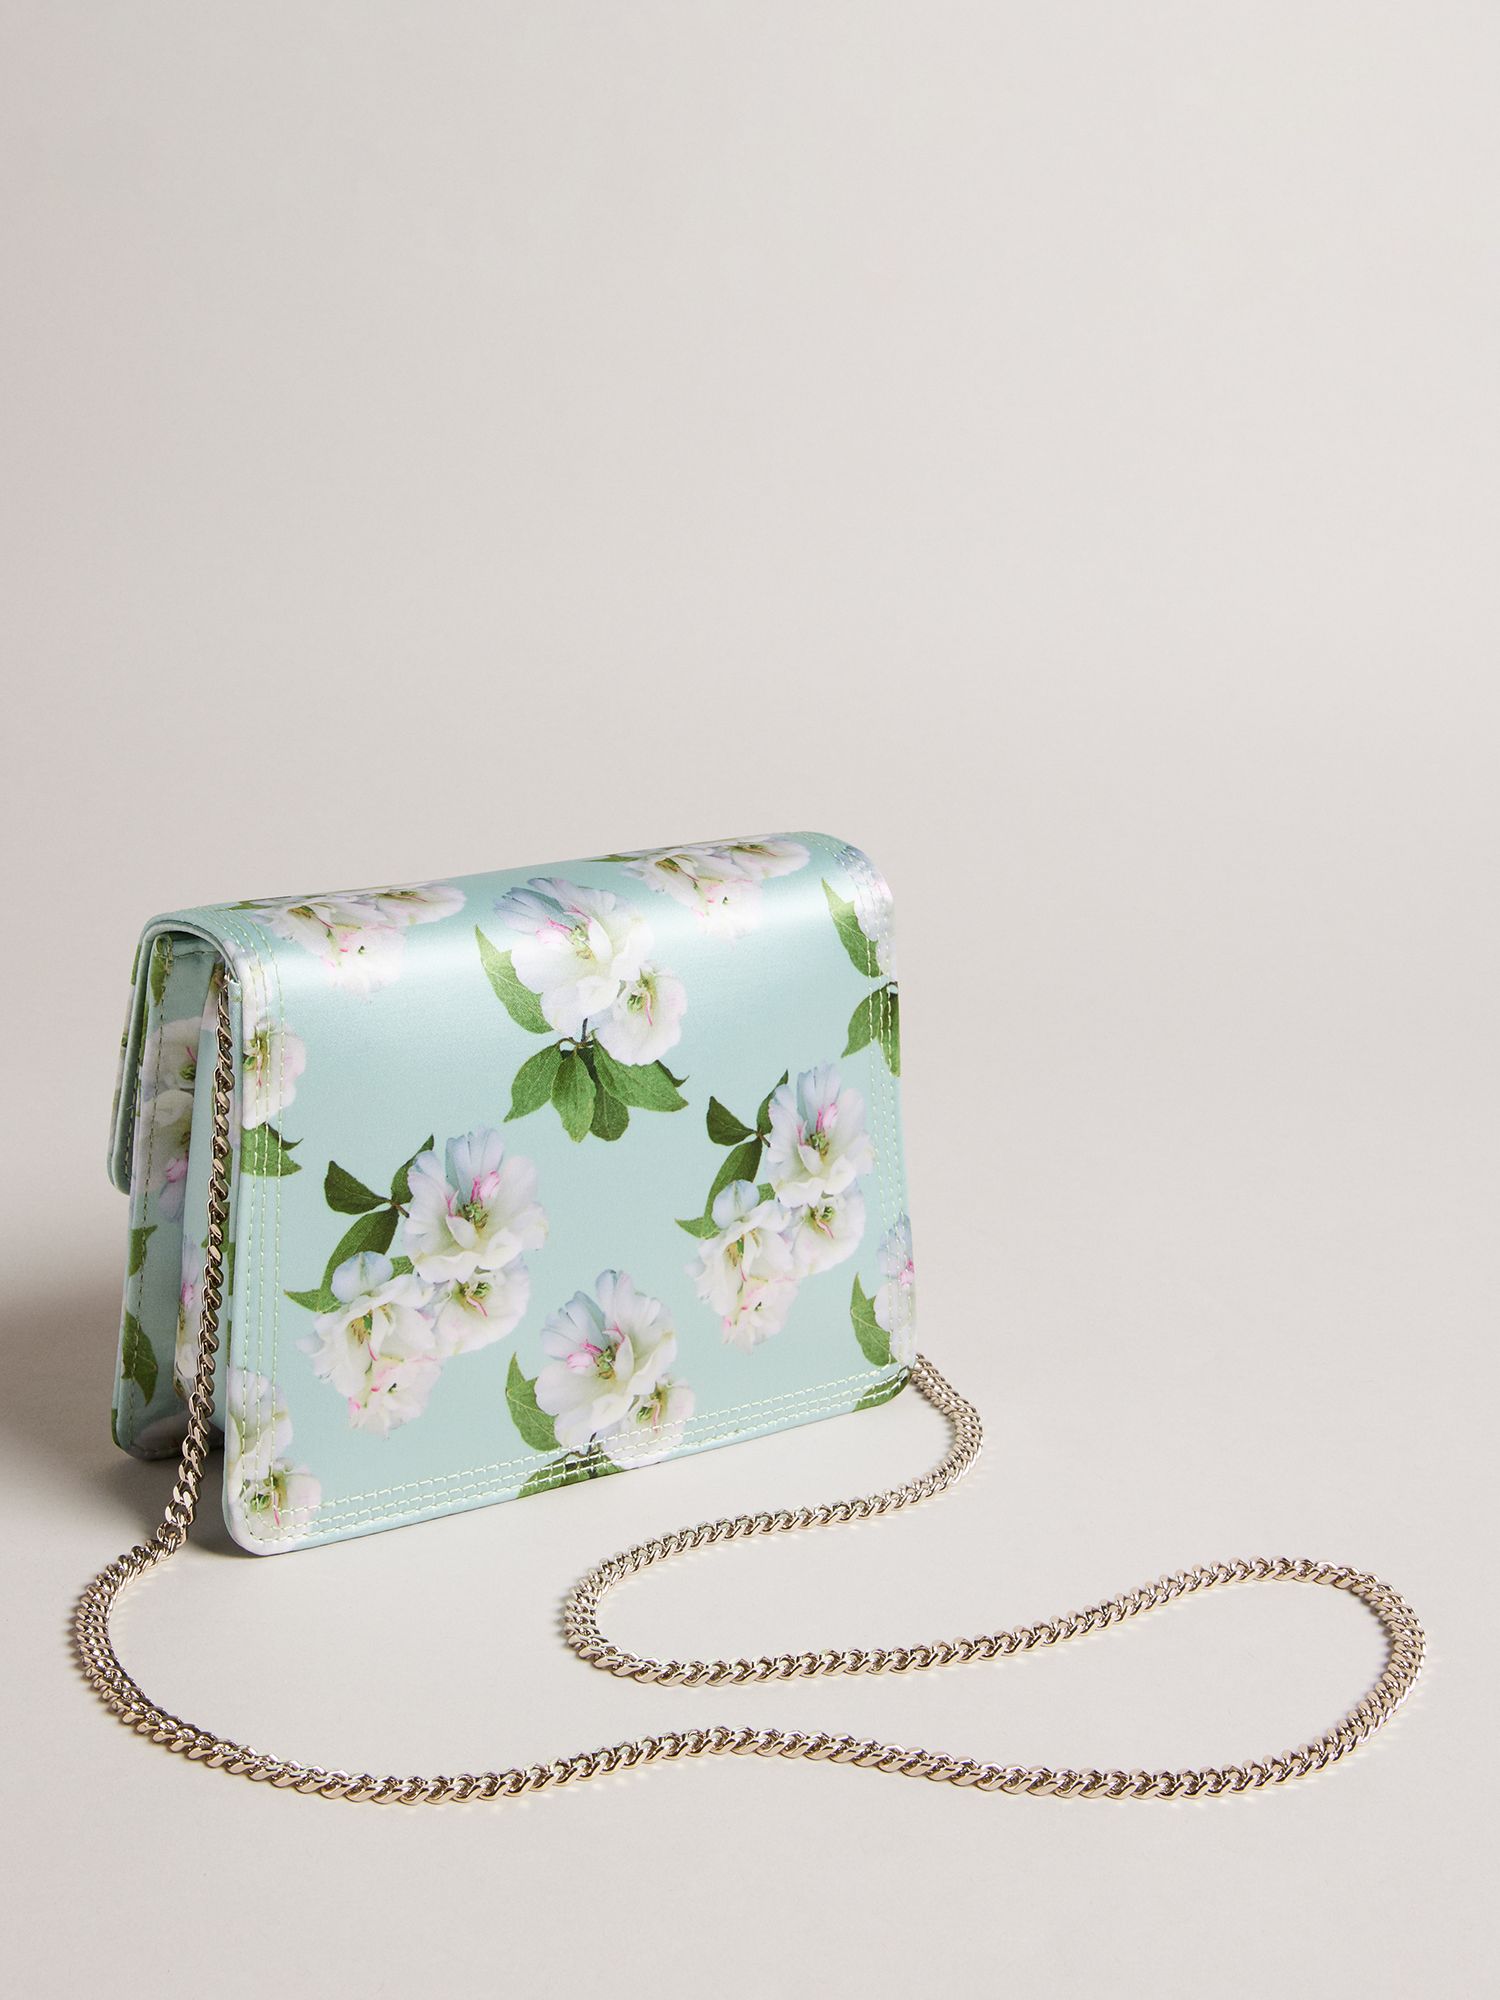 Ted Baker Jenia Floral Chain Strap Shoulder Bag, Dark Blue/Multi, One Size